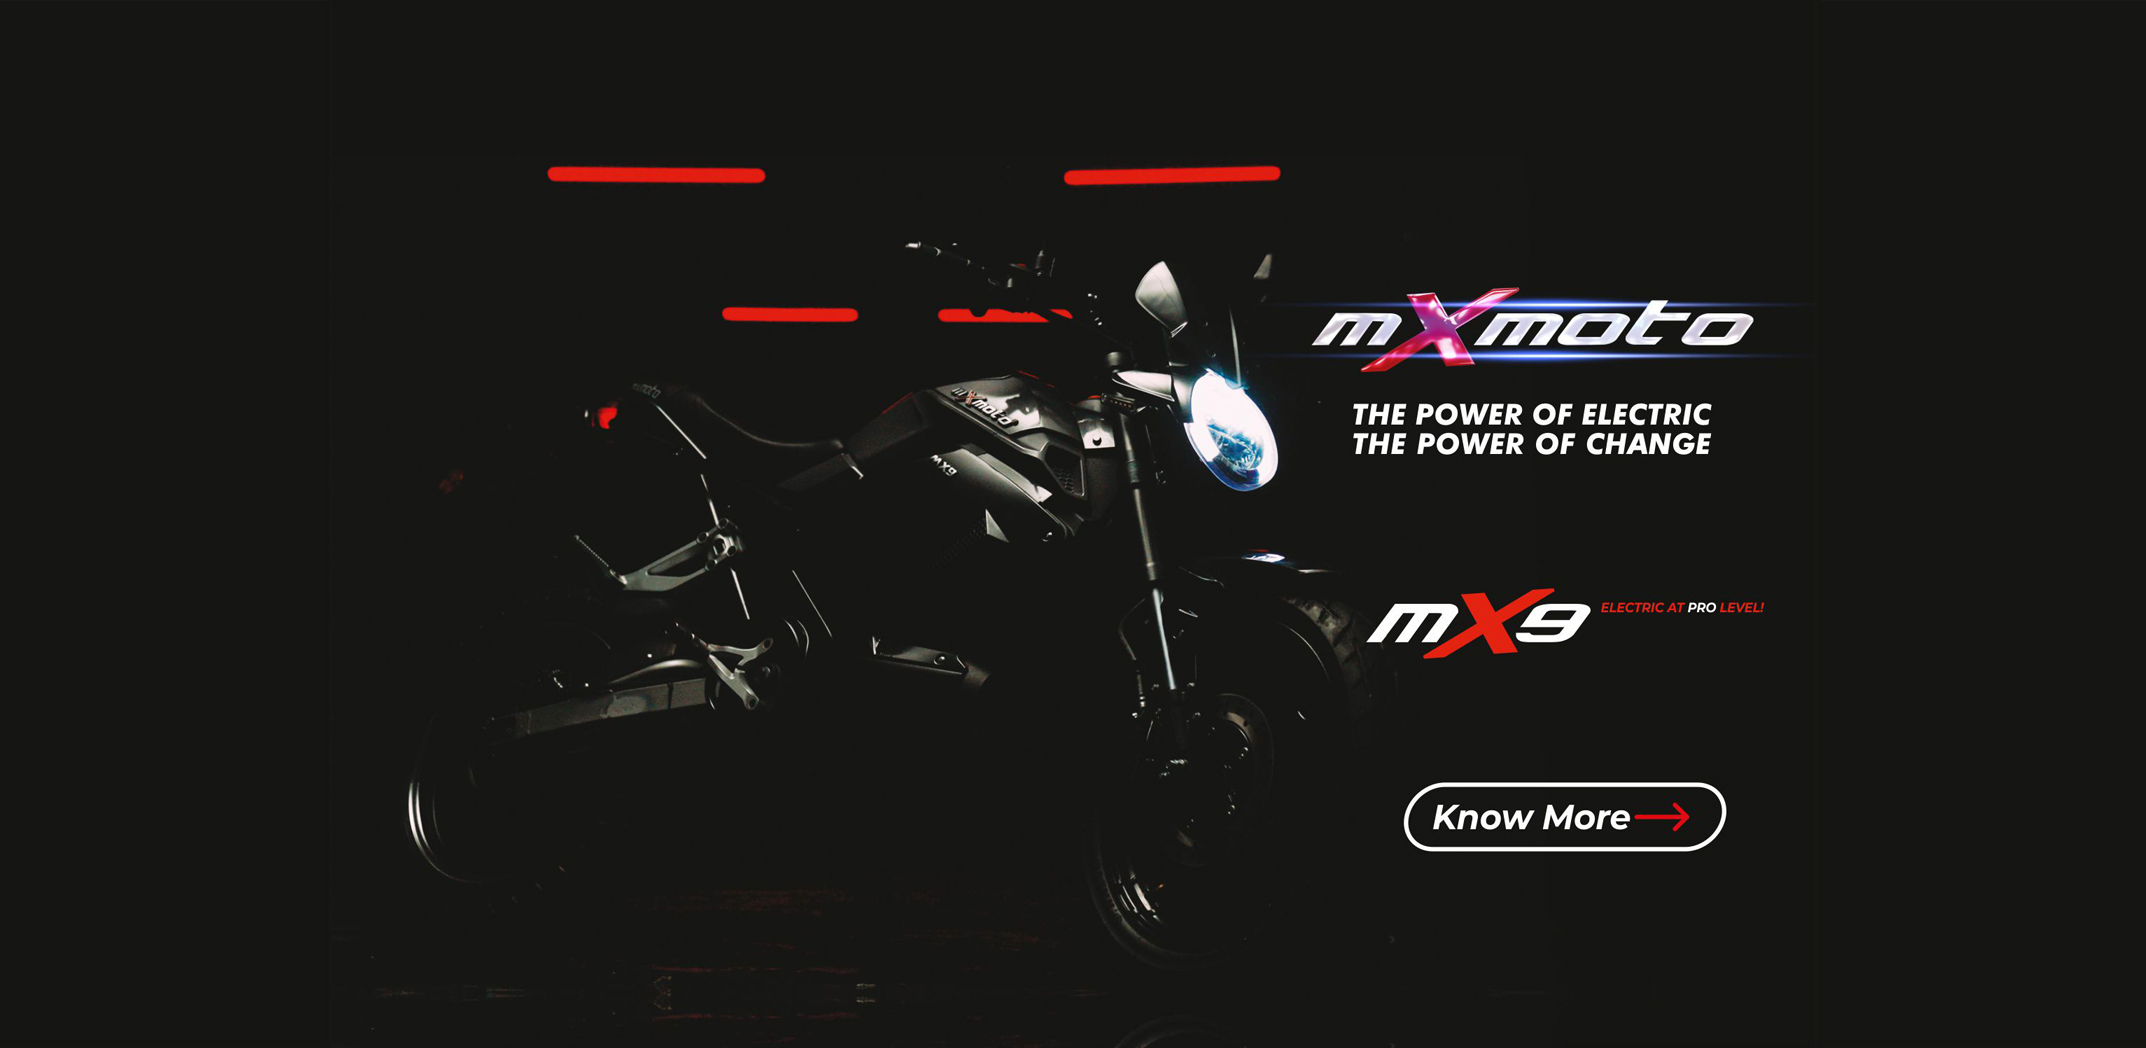 Mx9 electric bike